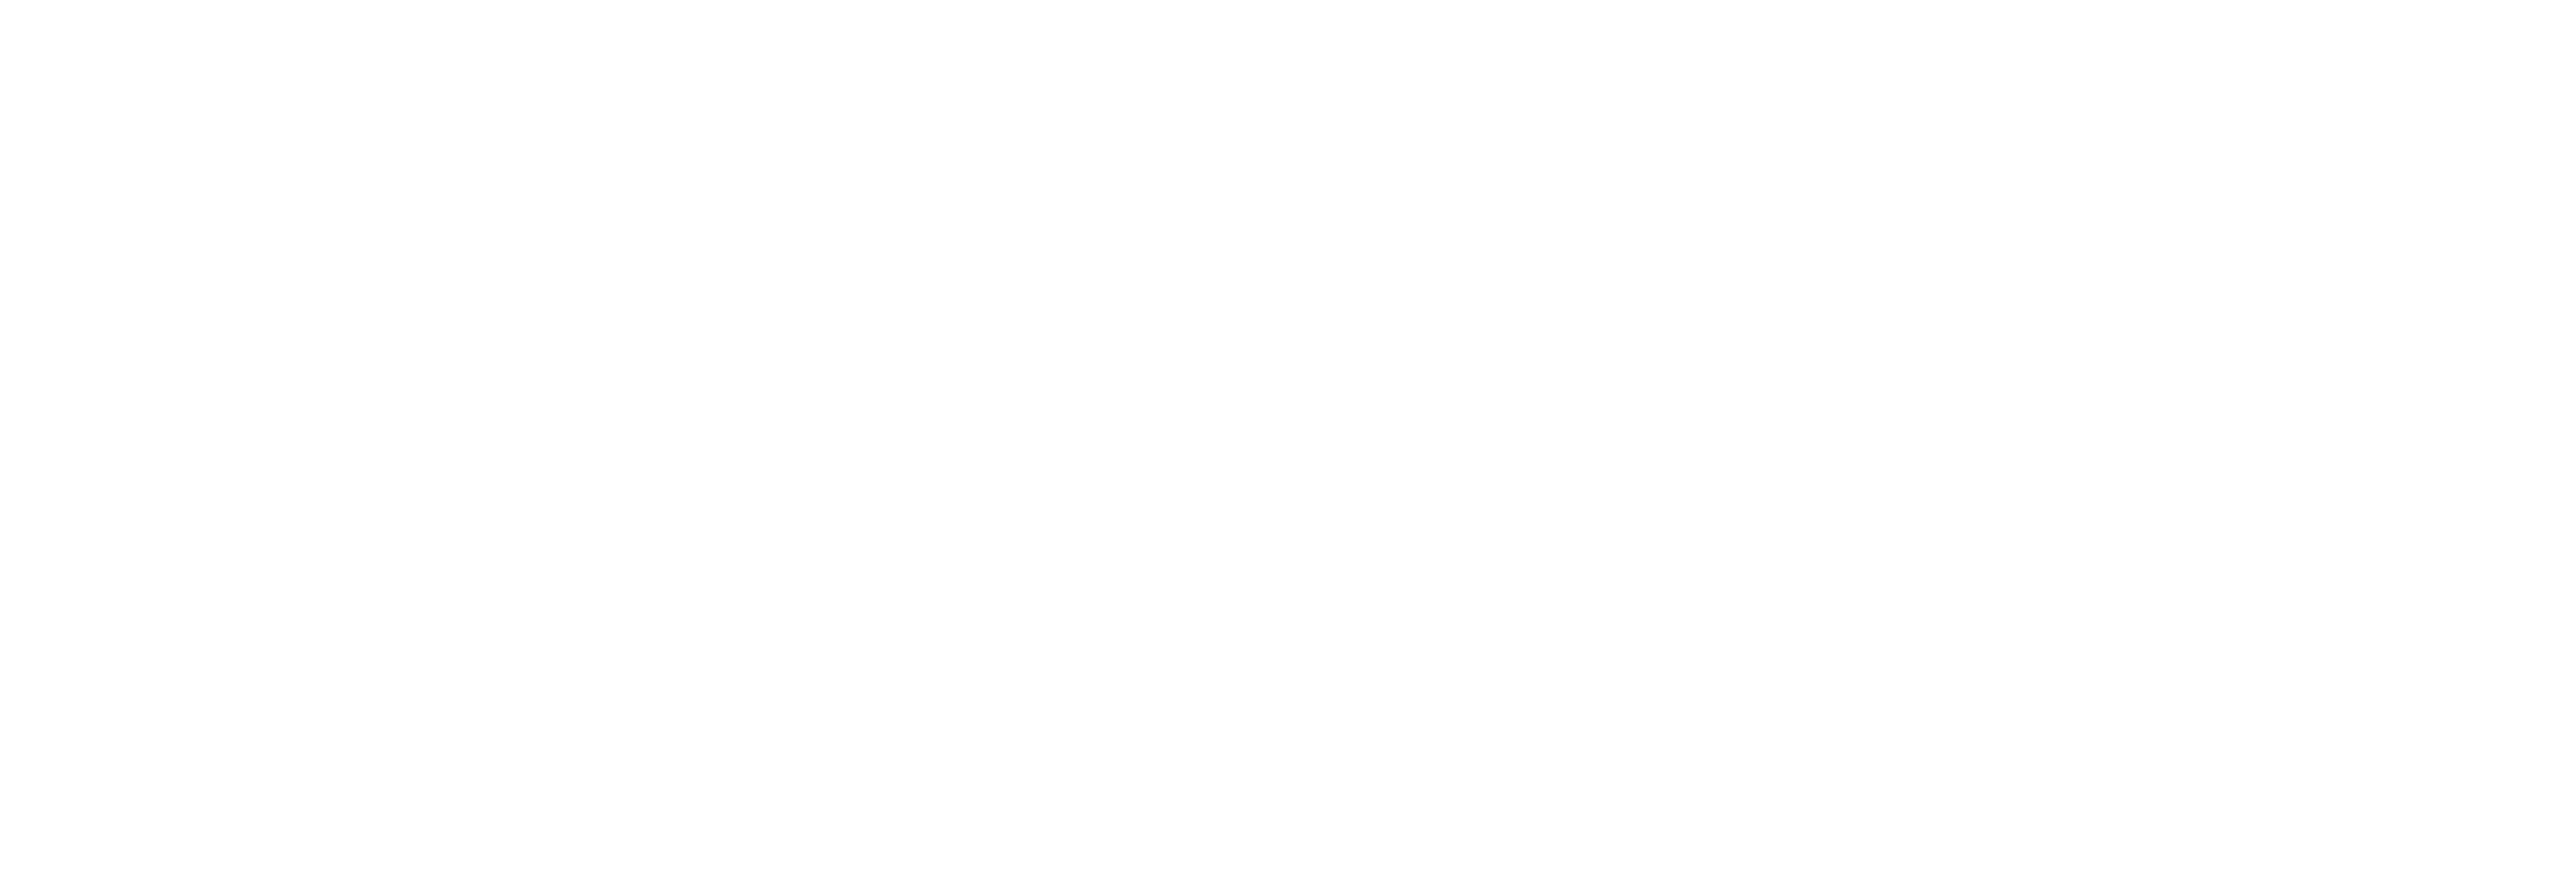 TTOY Digital ltd